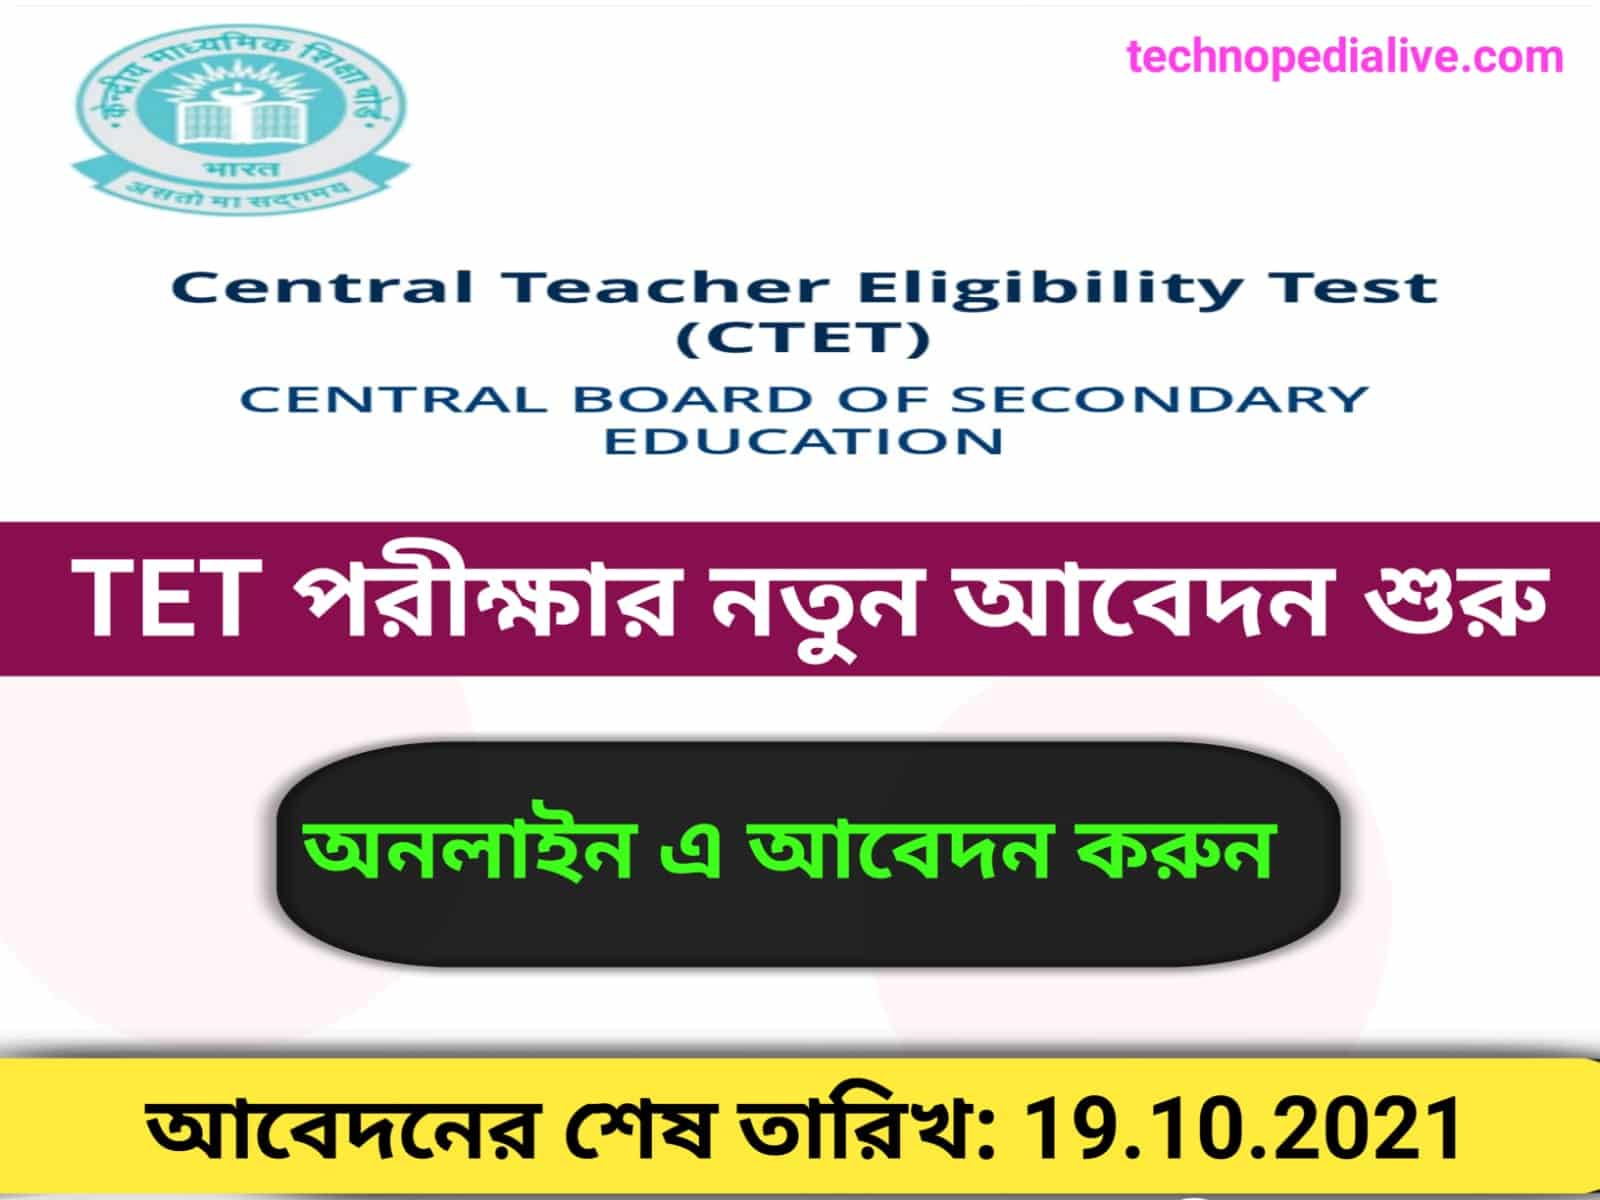 CTET 2021 Online Application | TET পরীক্ষার জন্য আবেদন শুরু হলো | Central Teacher Eligibility Test 2021 - Post Image